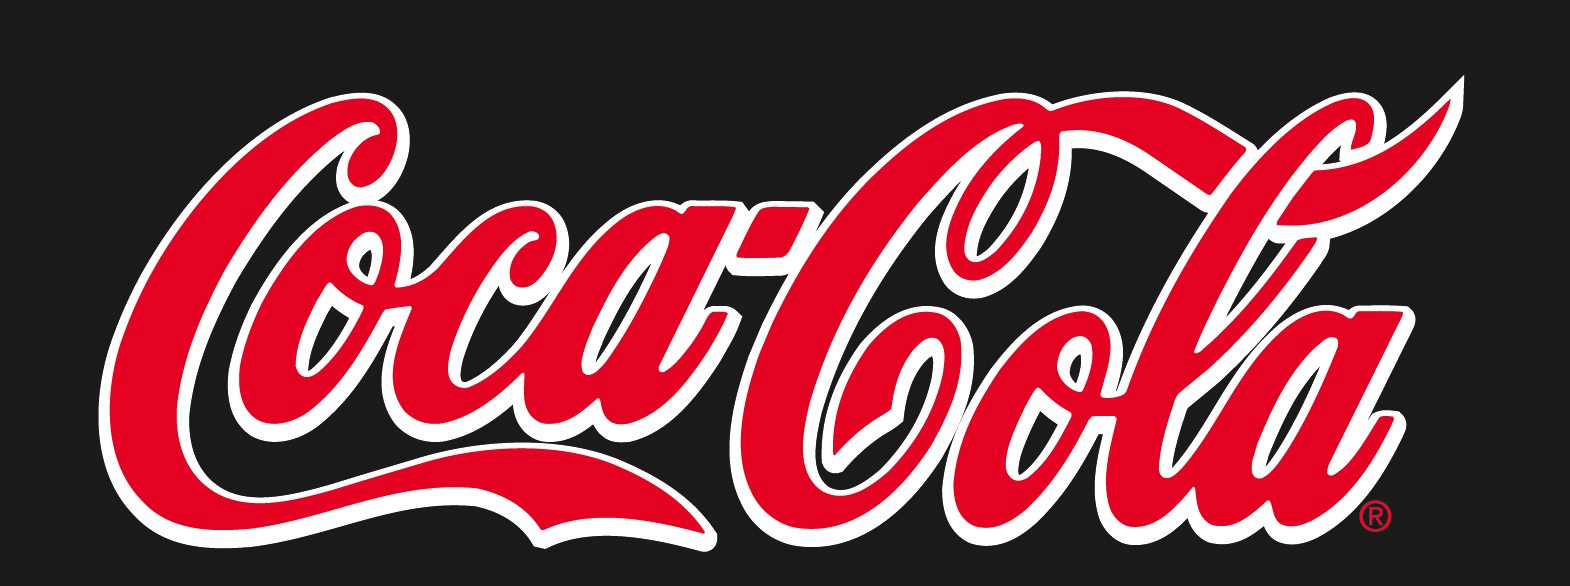 Coca-Cola - Chamber of Commerce